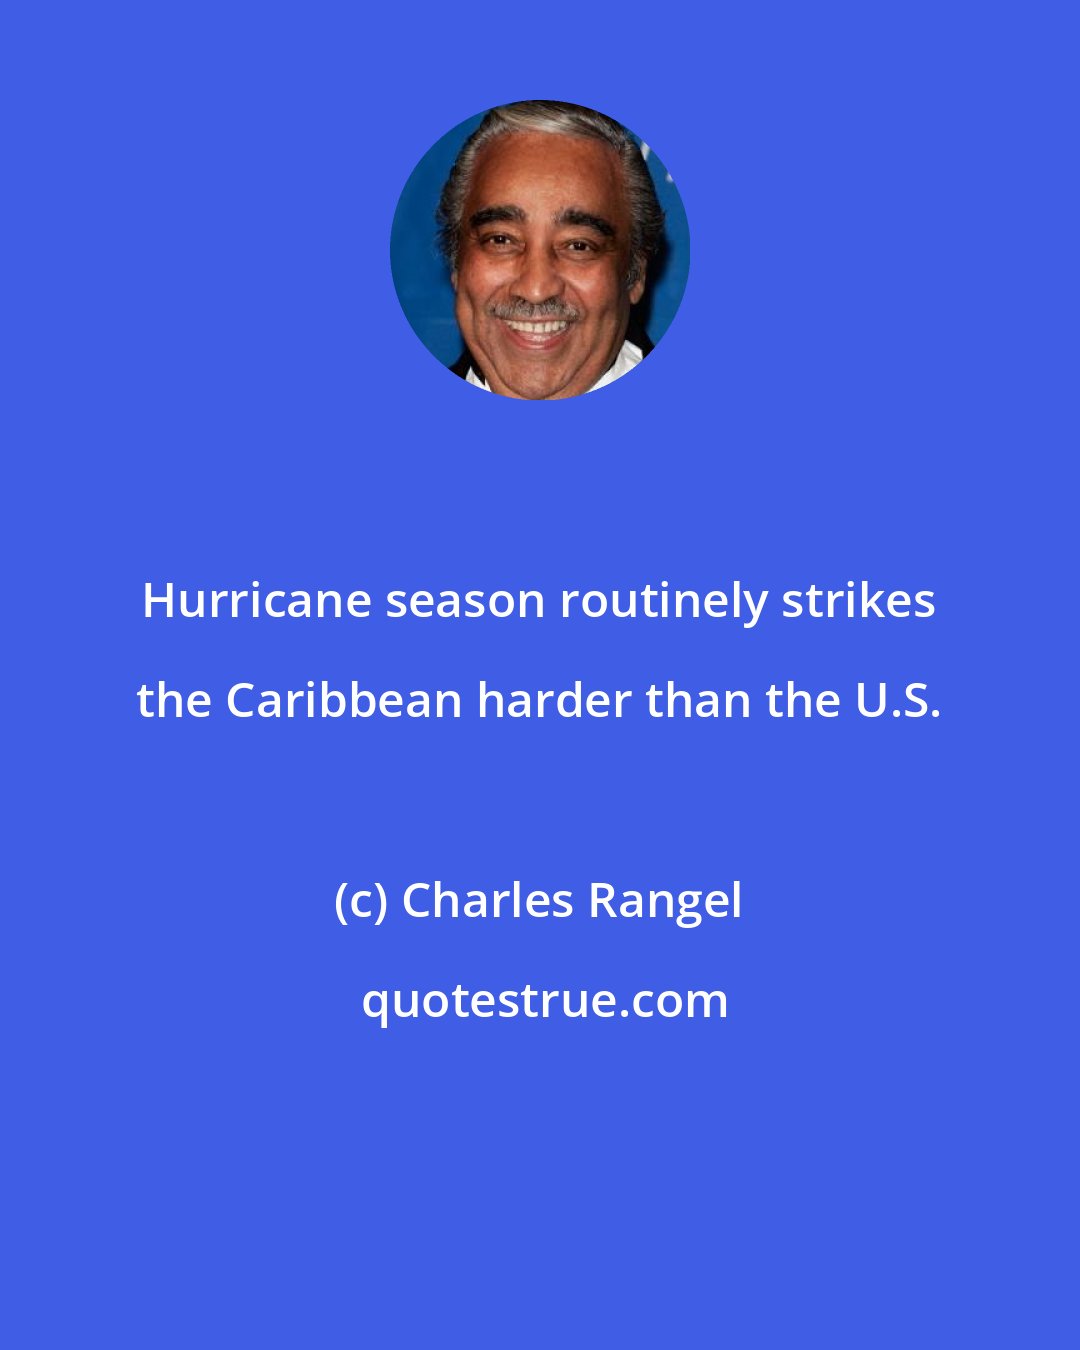 Charles Rangel: Hurricane season routinely strikes the Caribbean harder than the U.S.